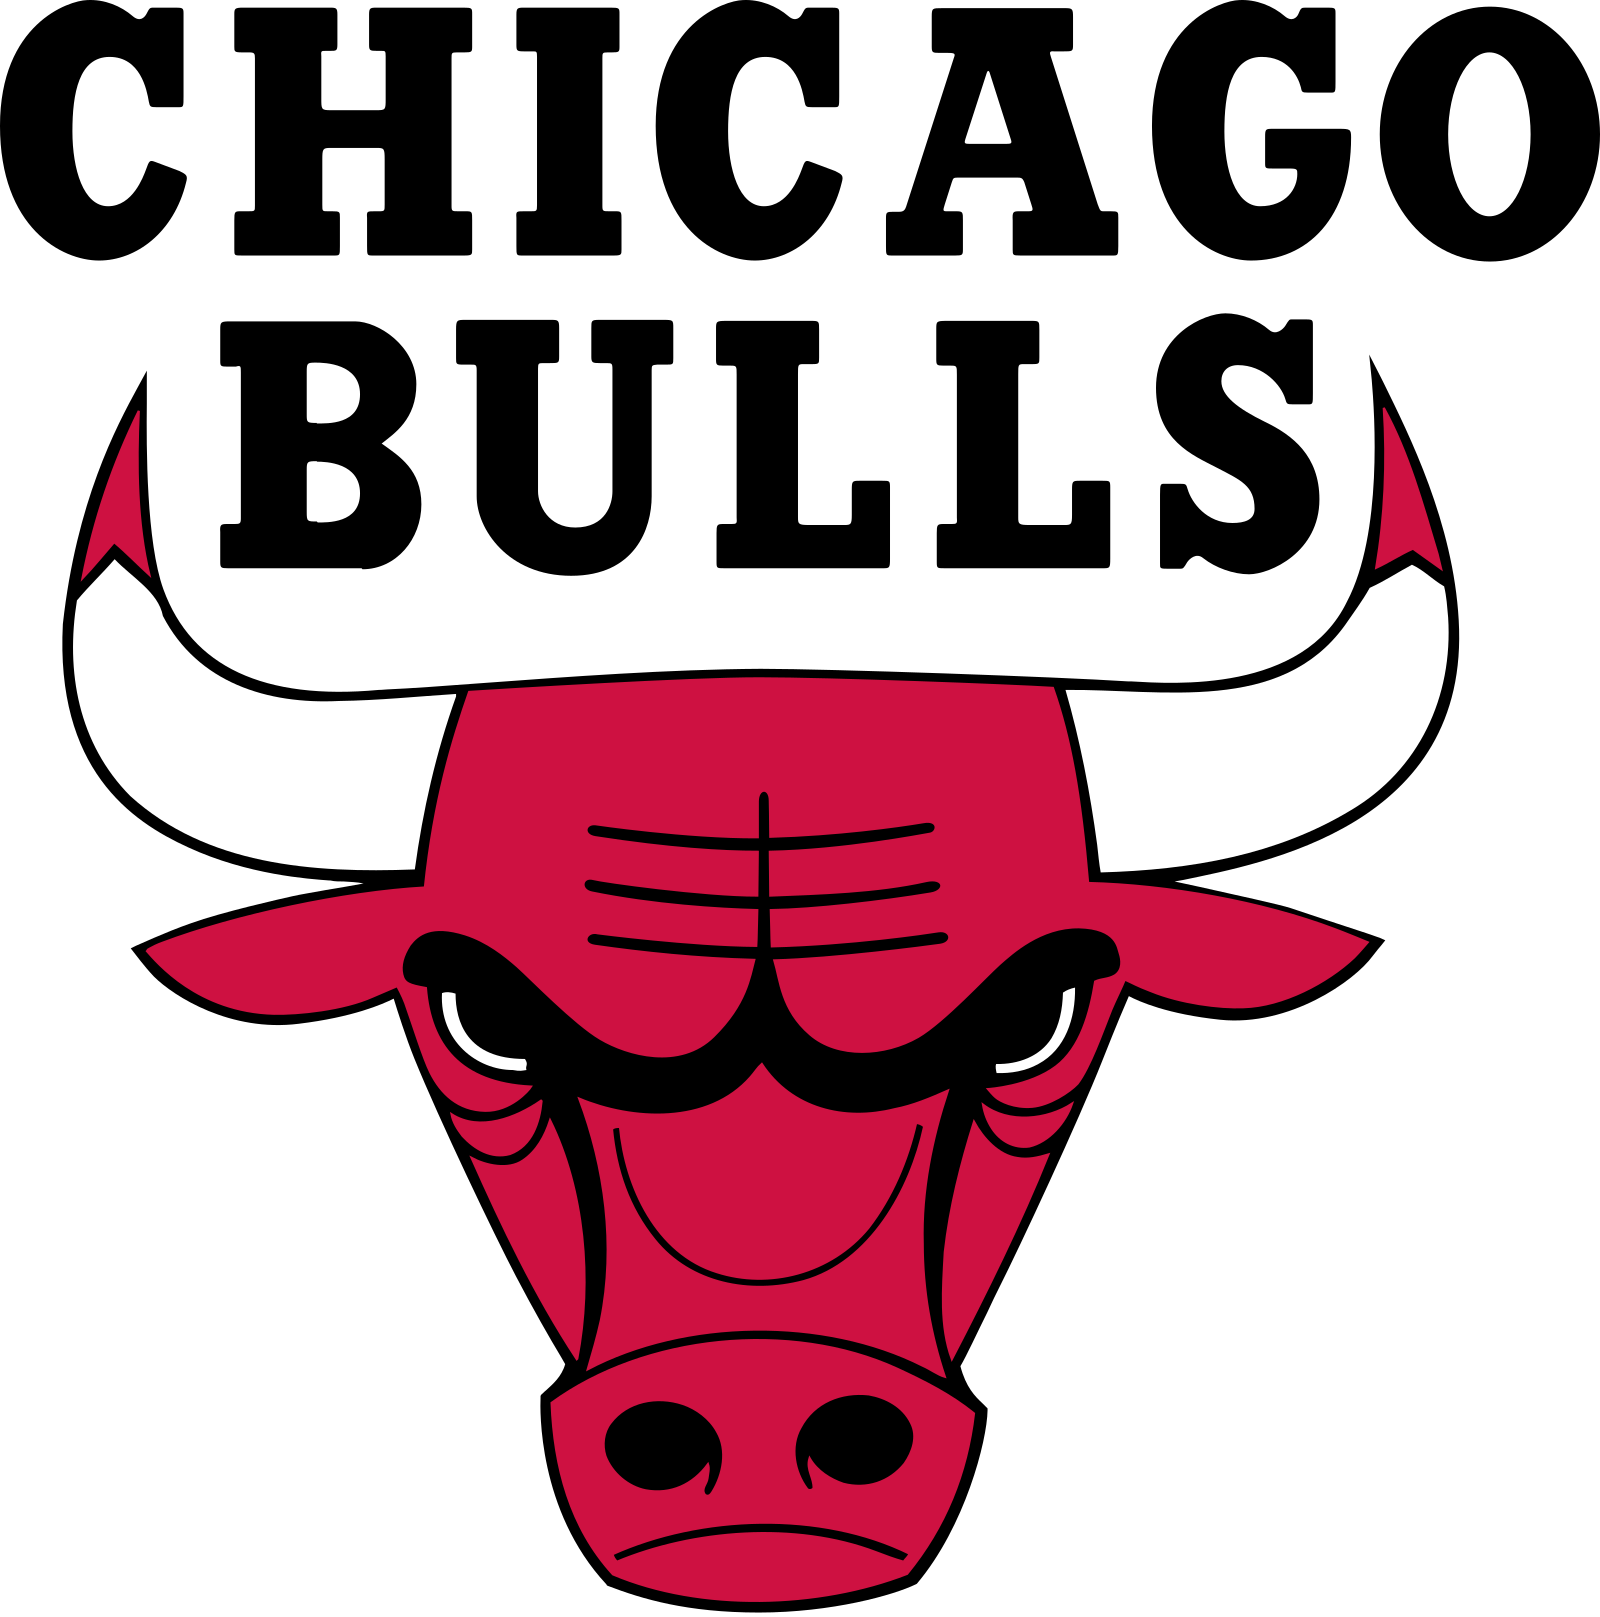 chicago bulls logo 2 - Chicago Bulls Logo